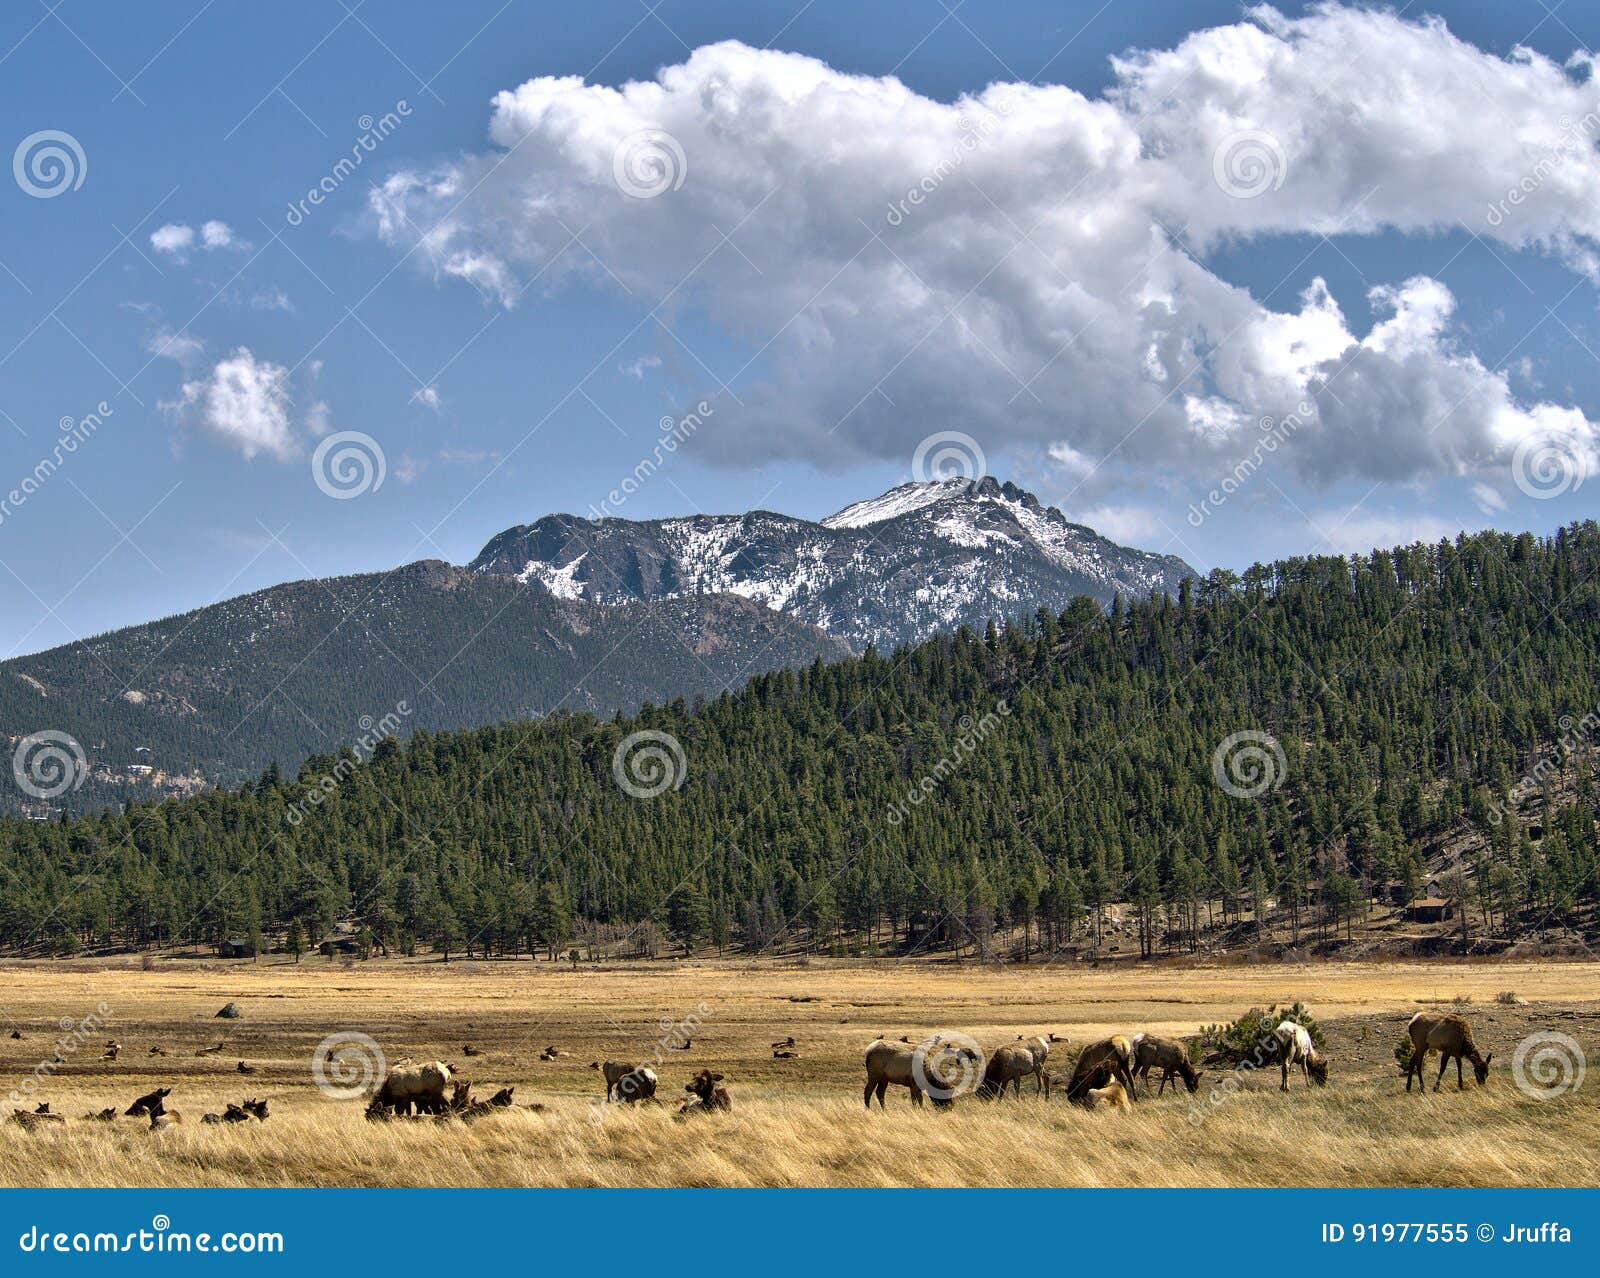 elk herd and rocky mountain national park vista